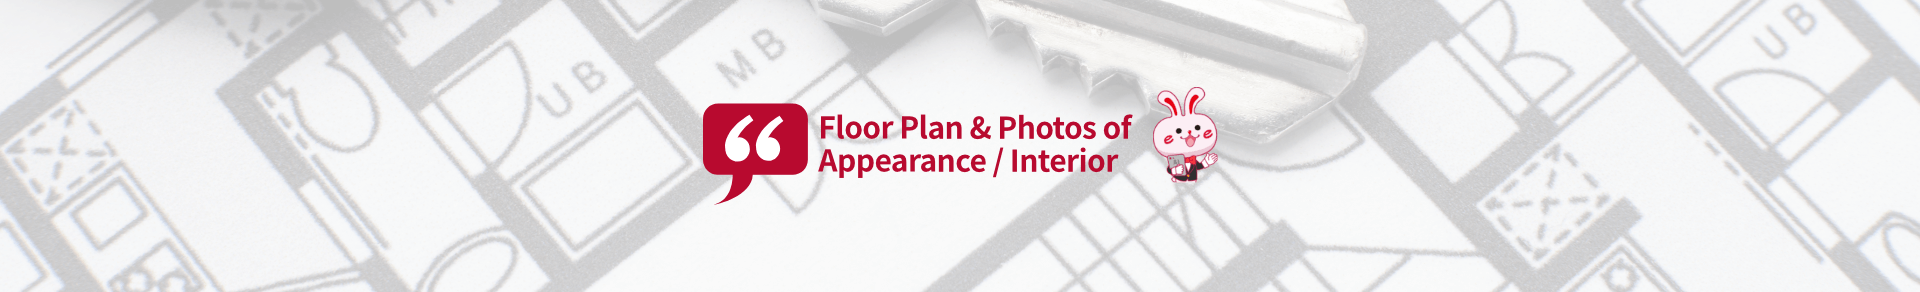 Floor Plan & Photos of Appearance / Interior